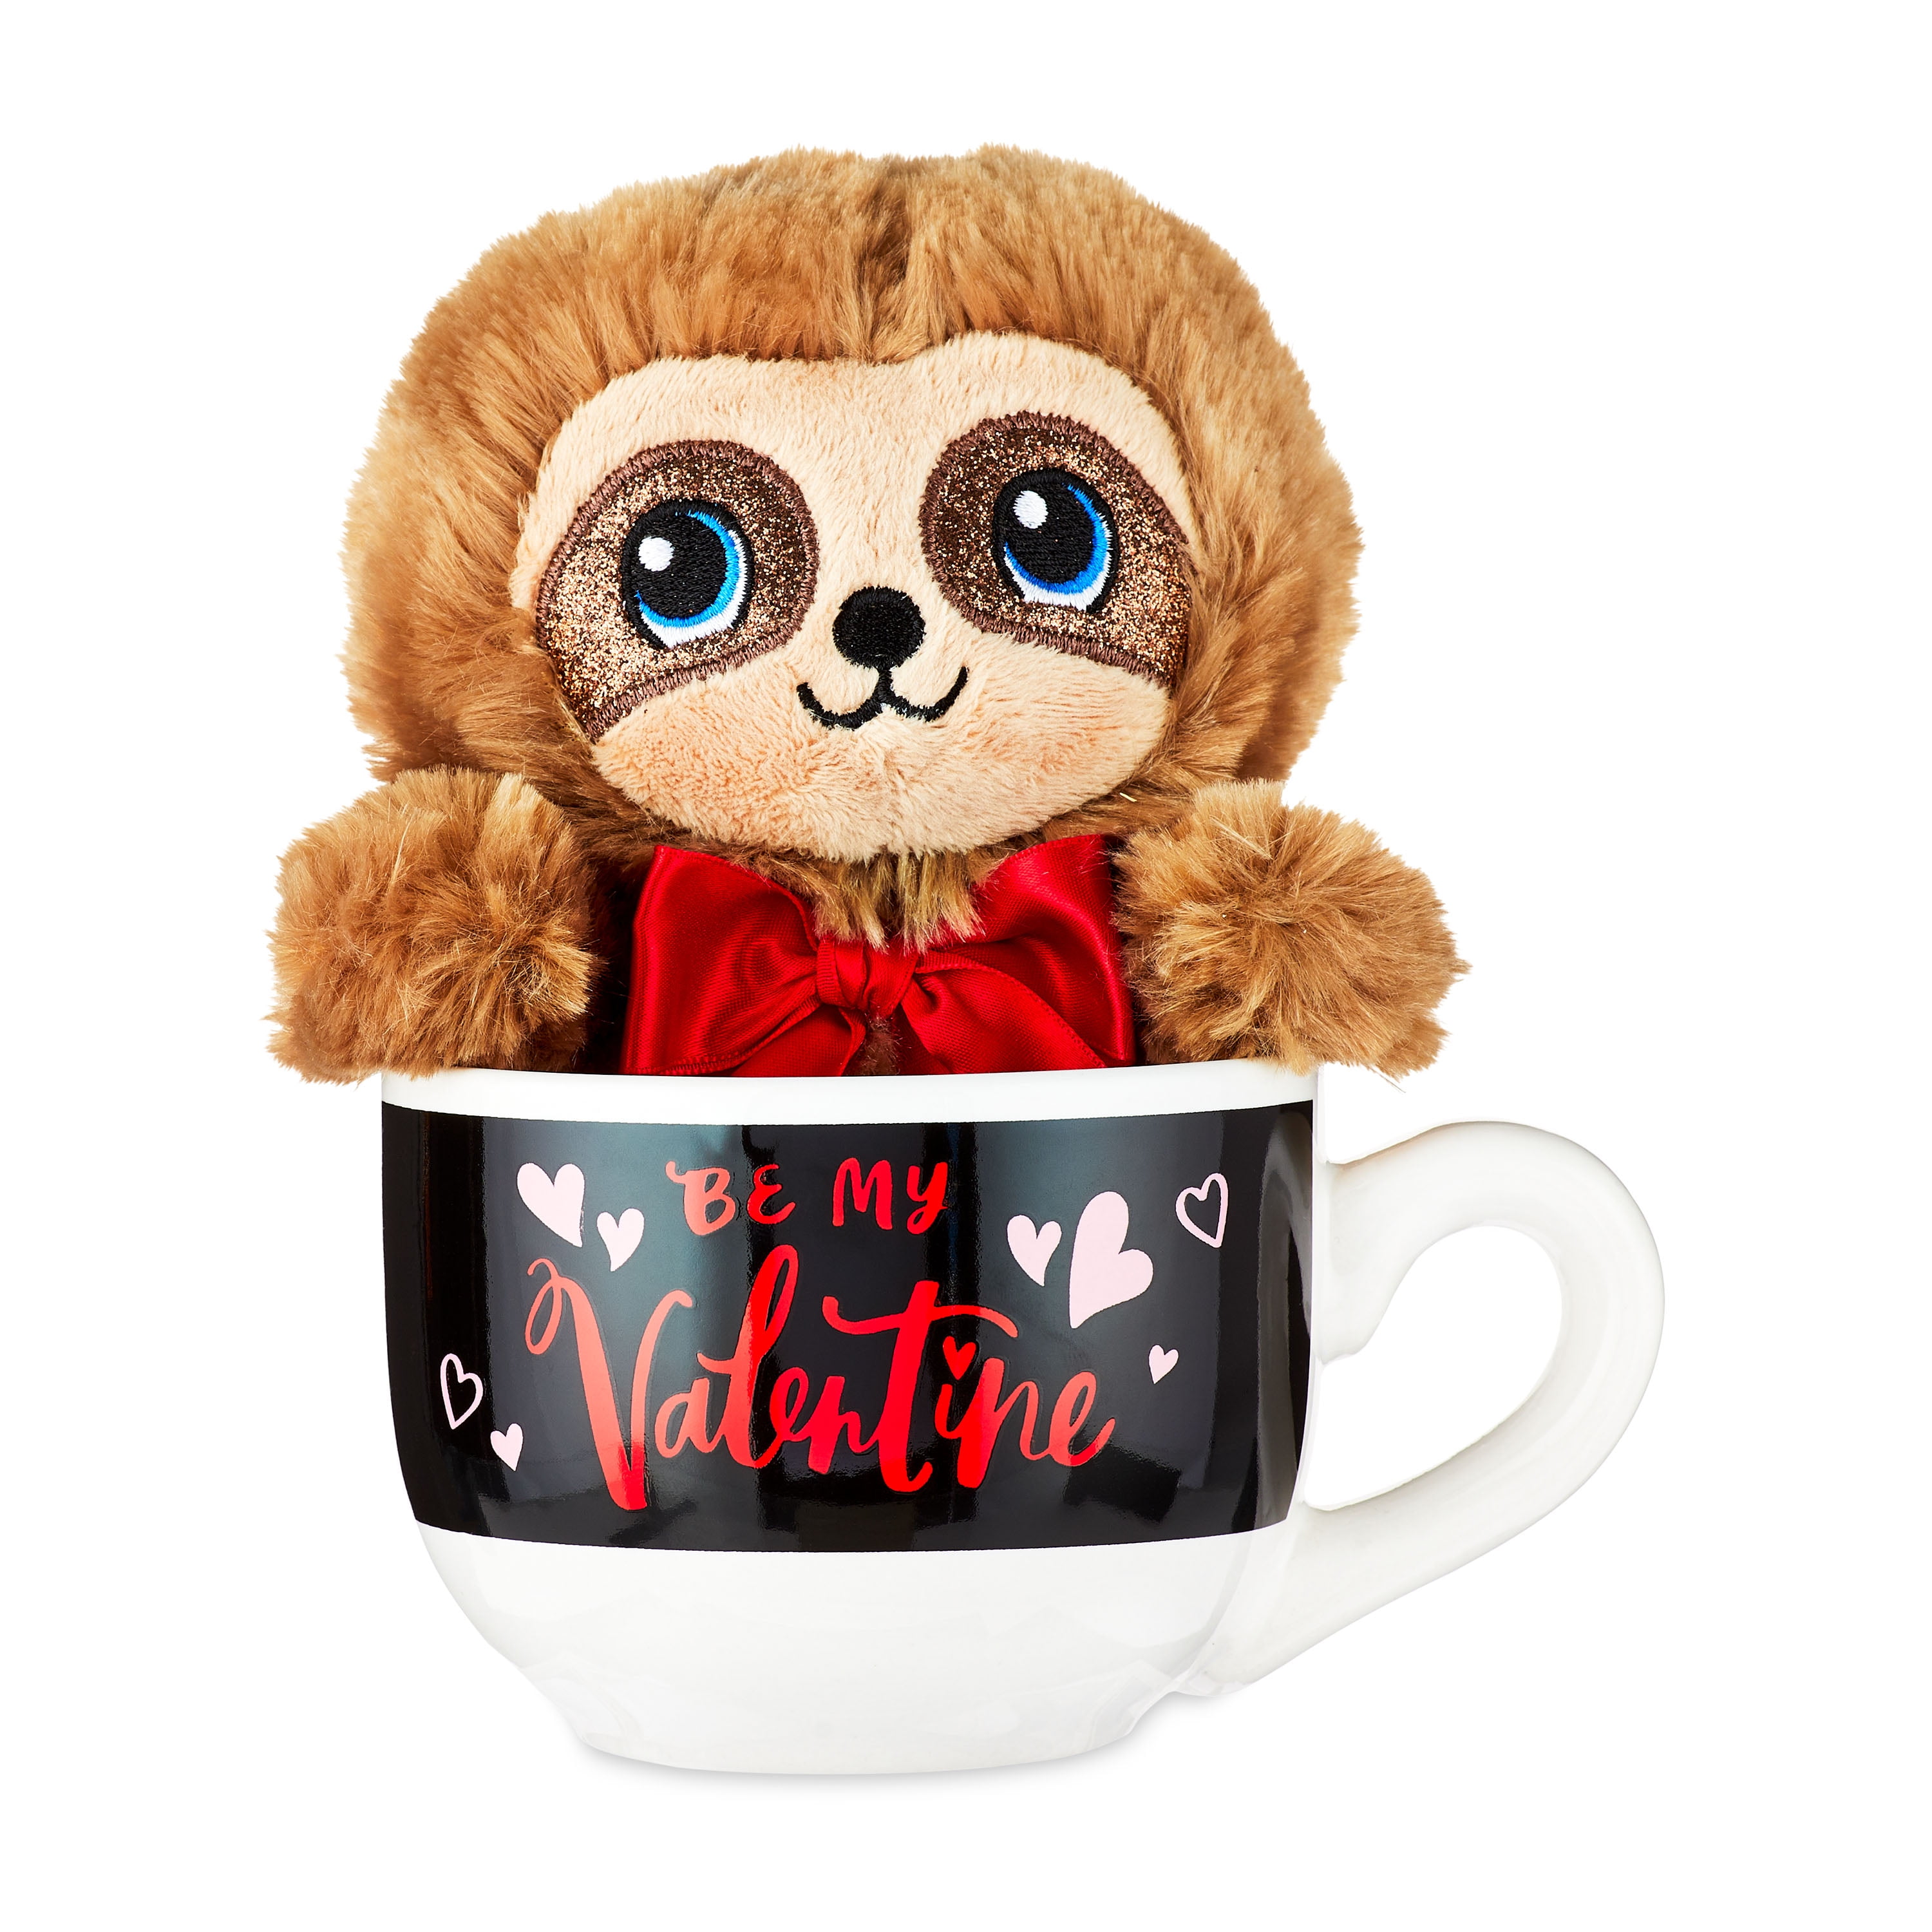 Way to Celebrate!&nbsp;Valentine’s Day Plush Toy in Teacher Mug Gift Set, Sloth ​​